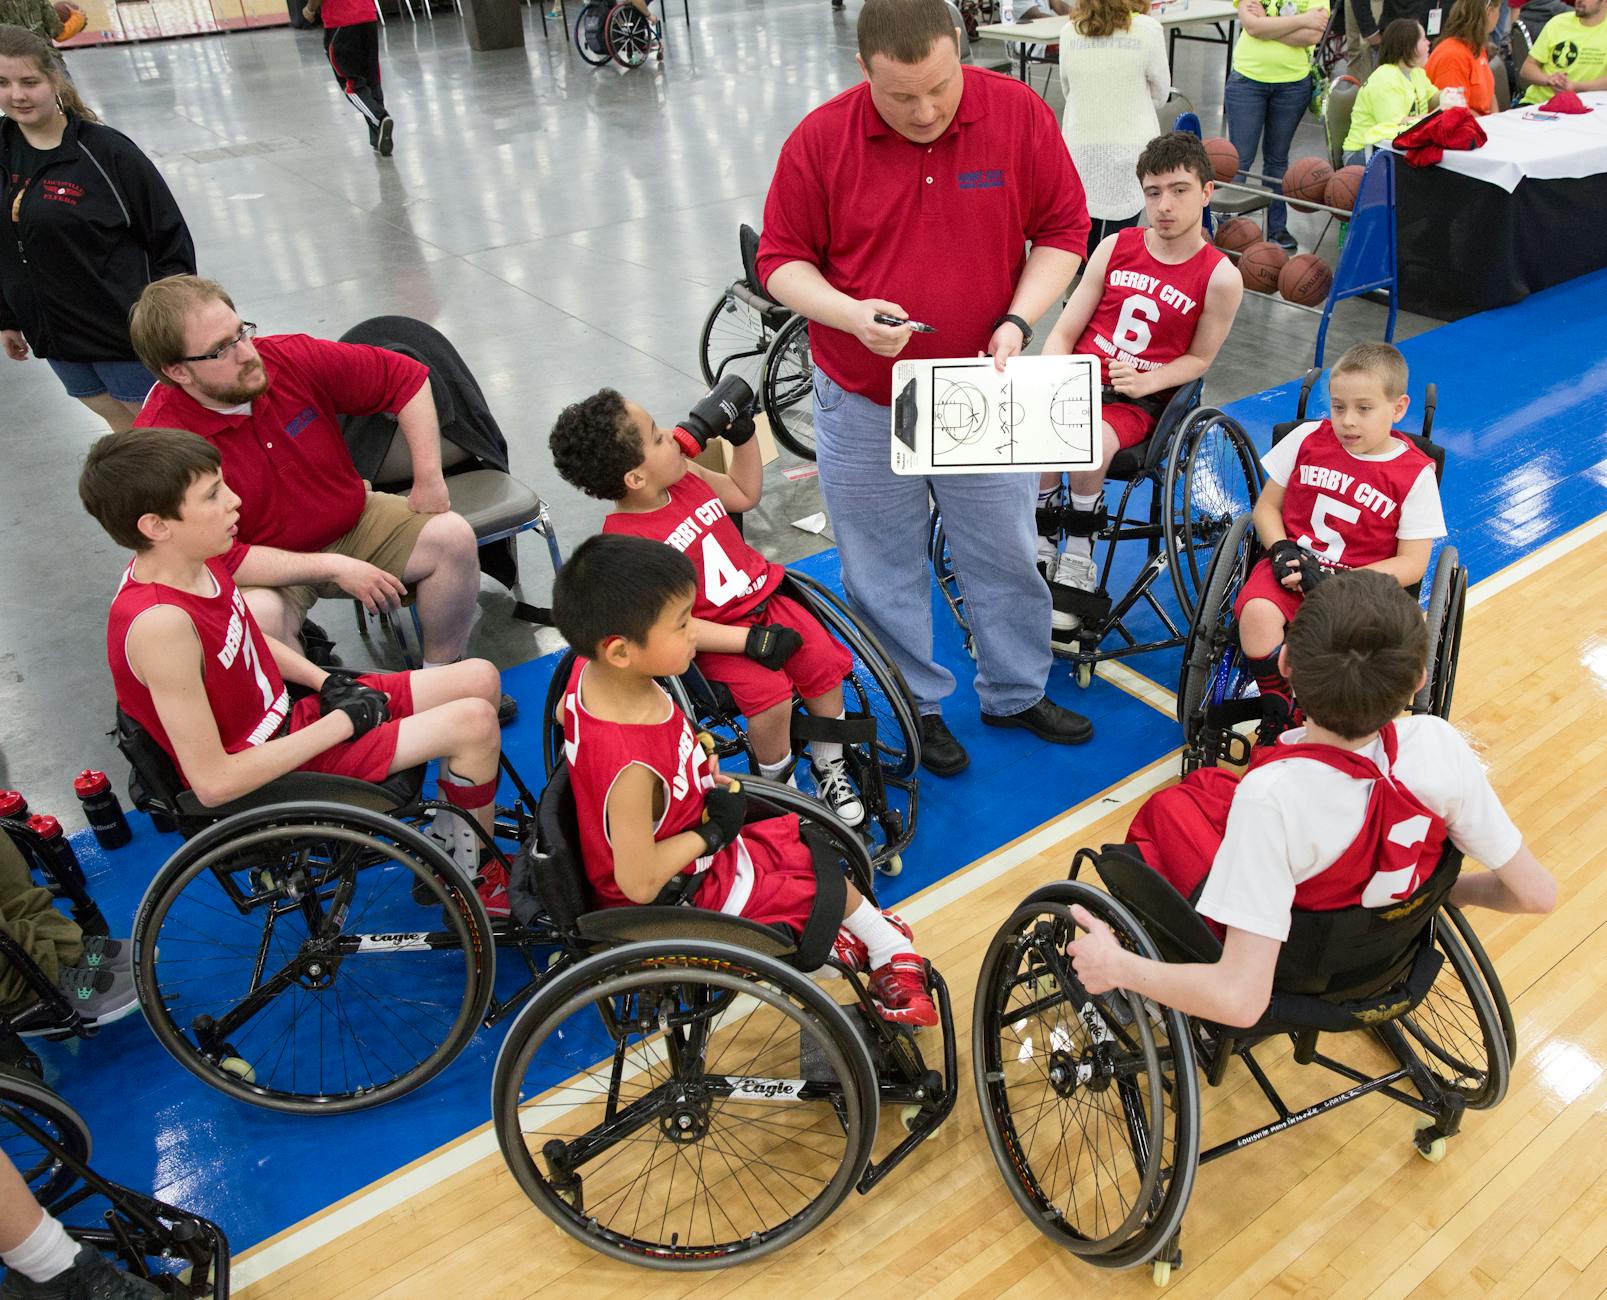 Group of Children Sitting on Wheelchair Wearing Basketball Uniforms